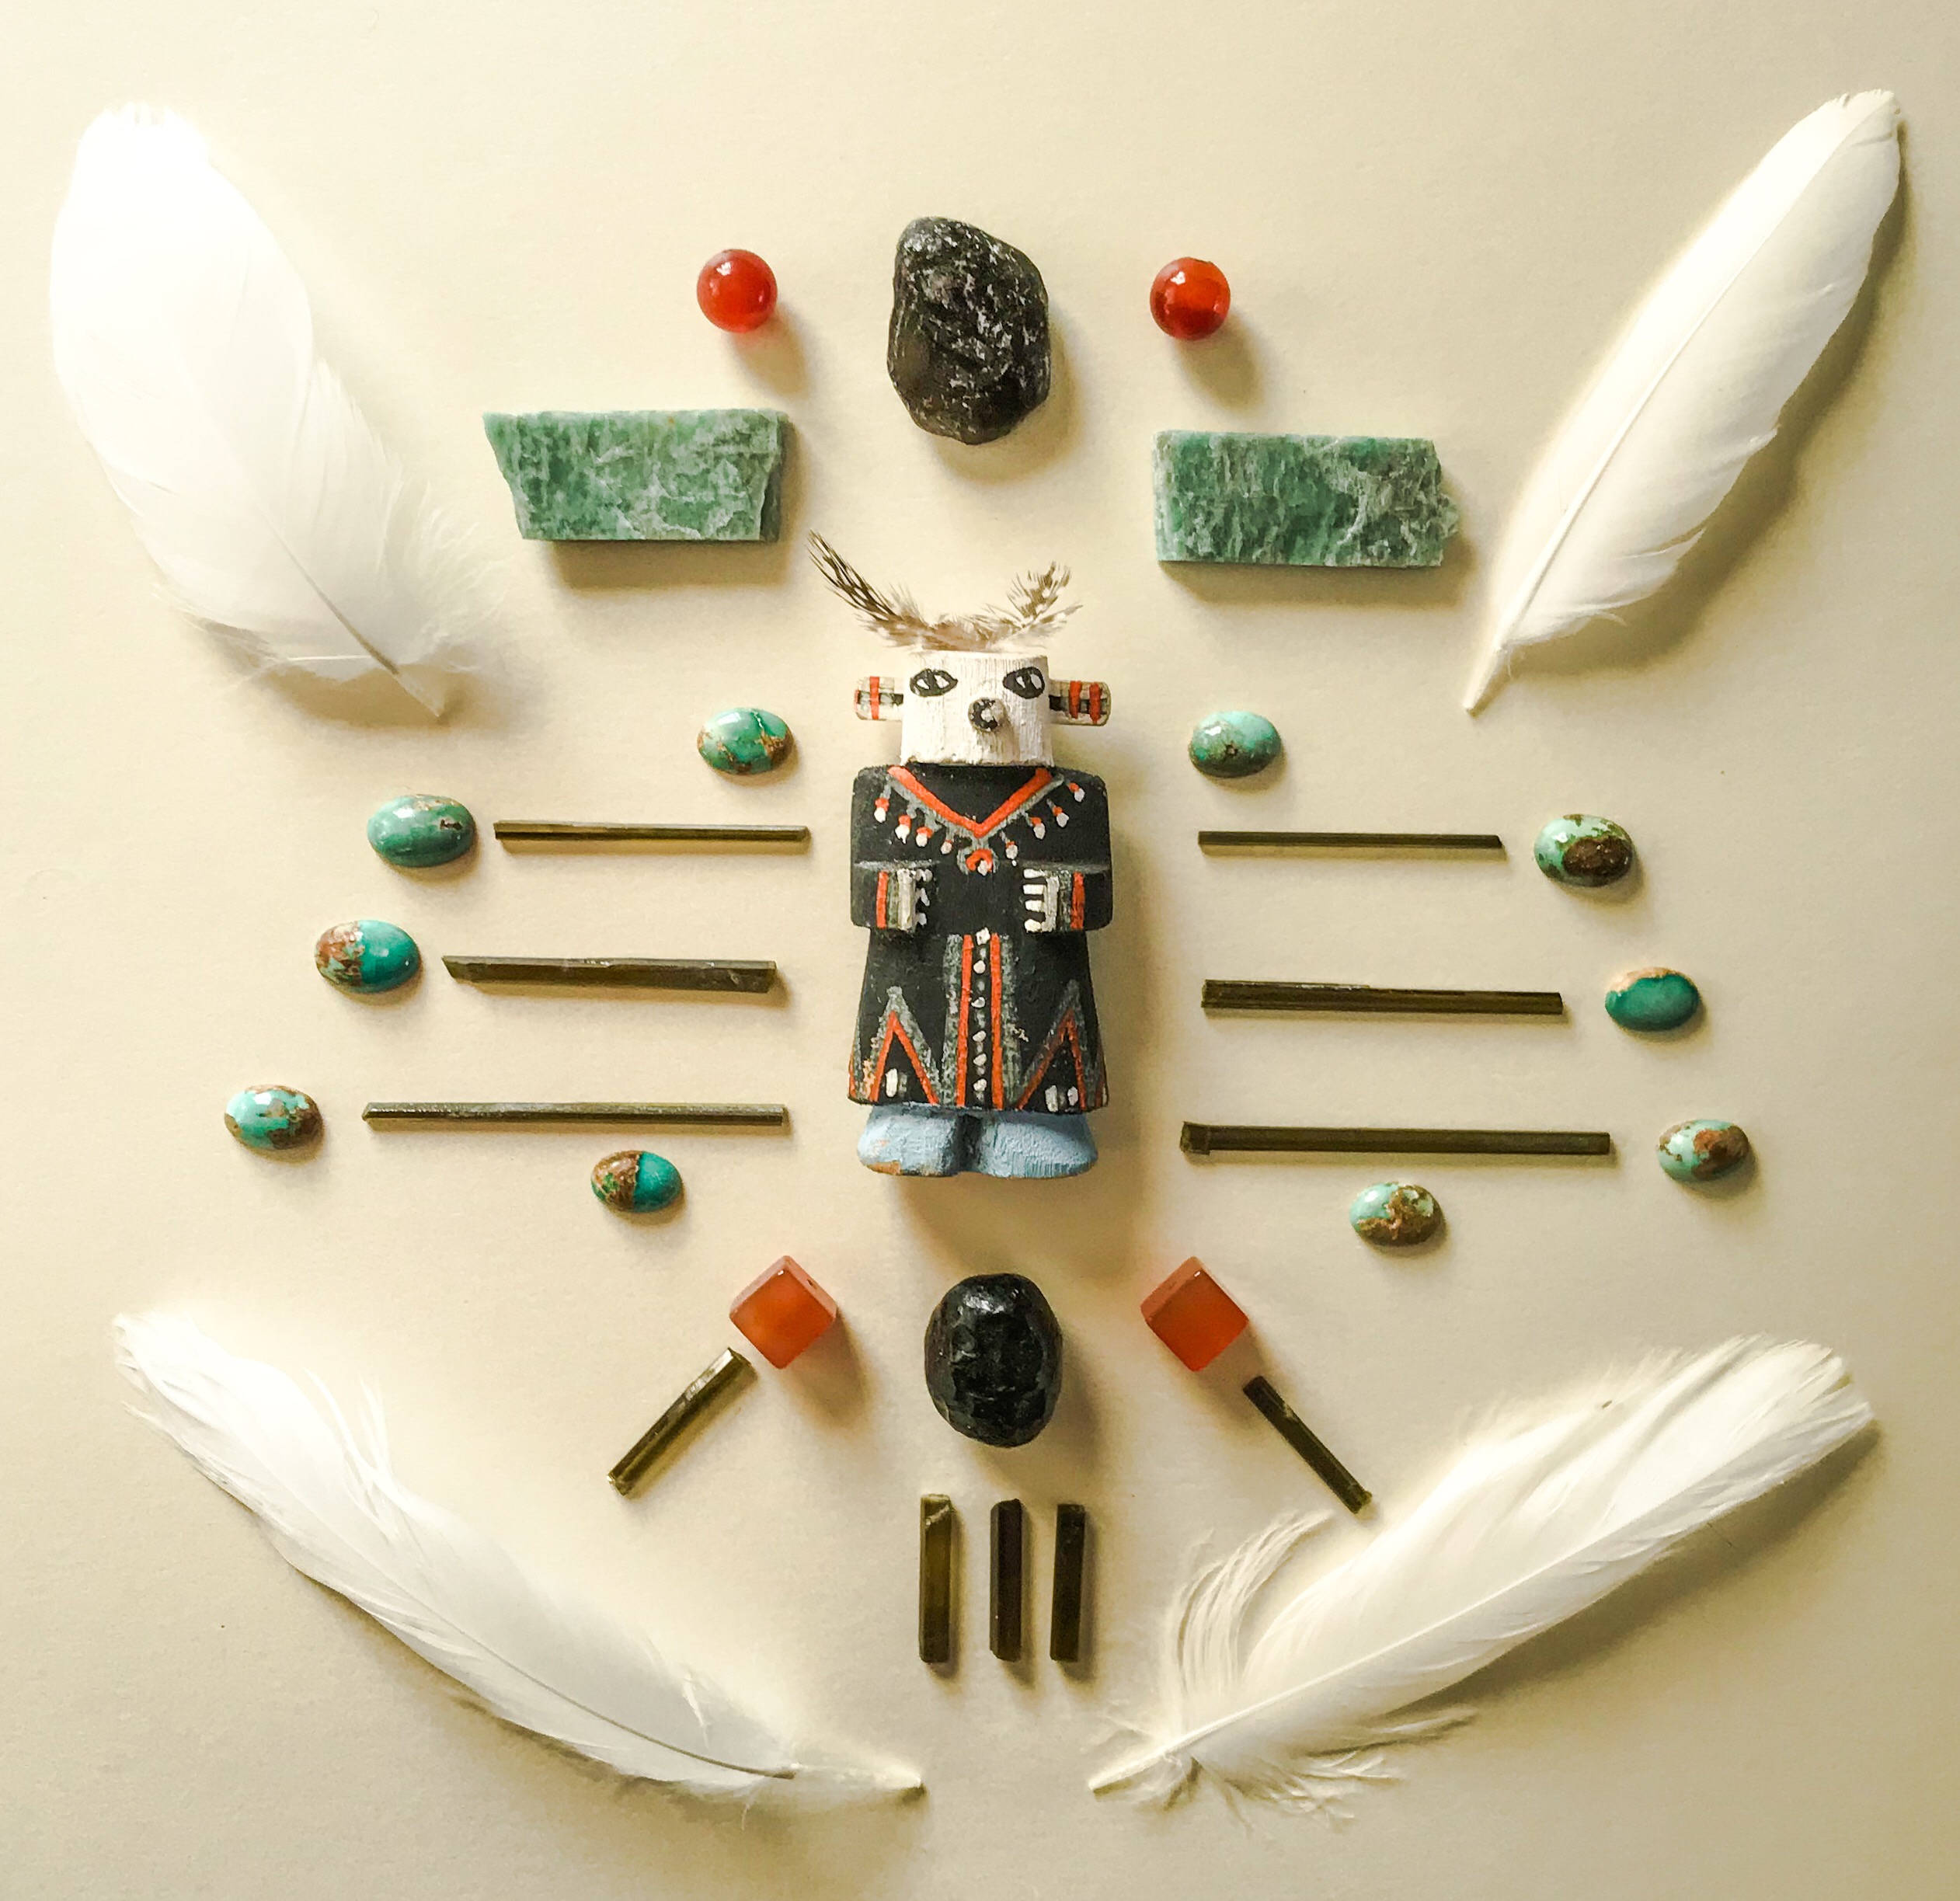 Dravite, Turquoise, Apache Tear, Carnelian, Apatite, White Feathers and a sacred Kachina